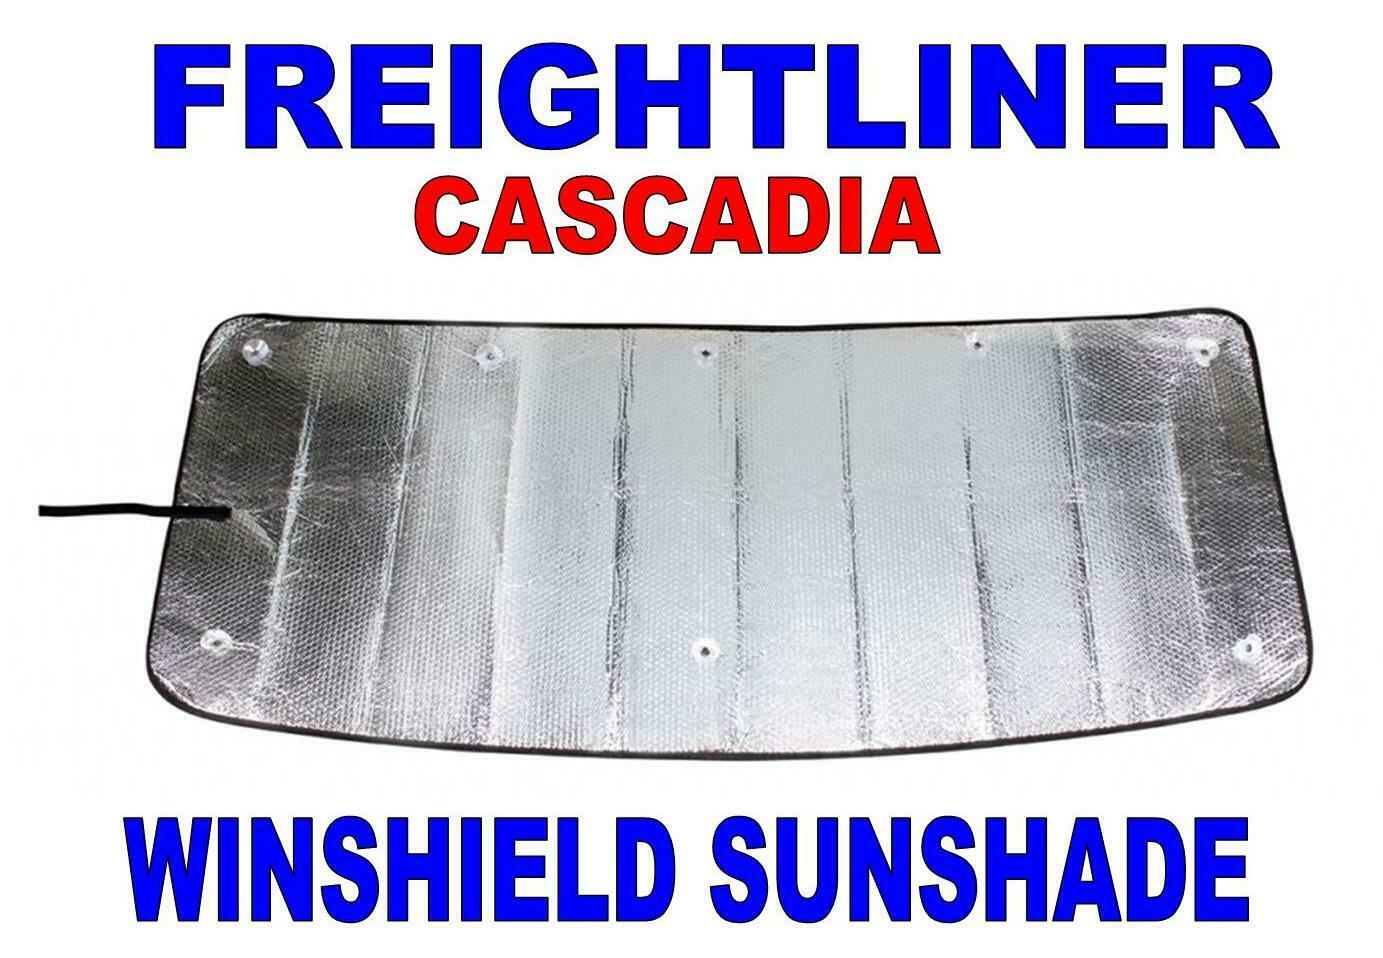 Freightliner Cascadia Windshield Sunshade (2008-2016)without sensor sunshade